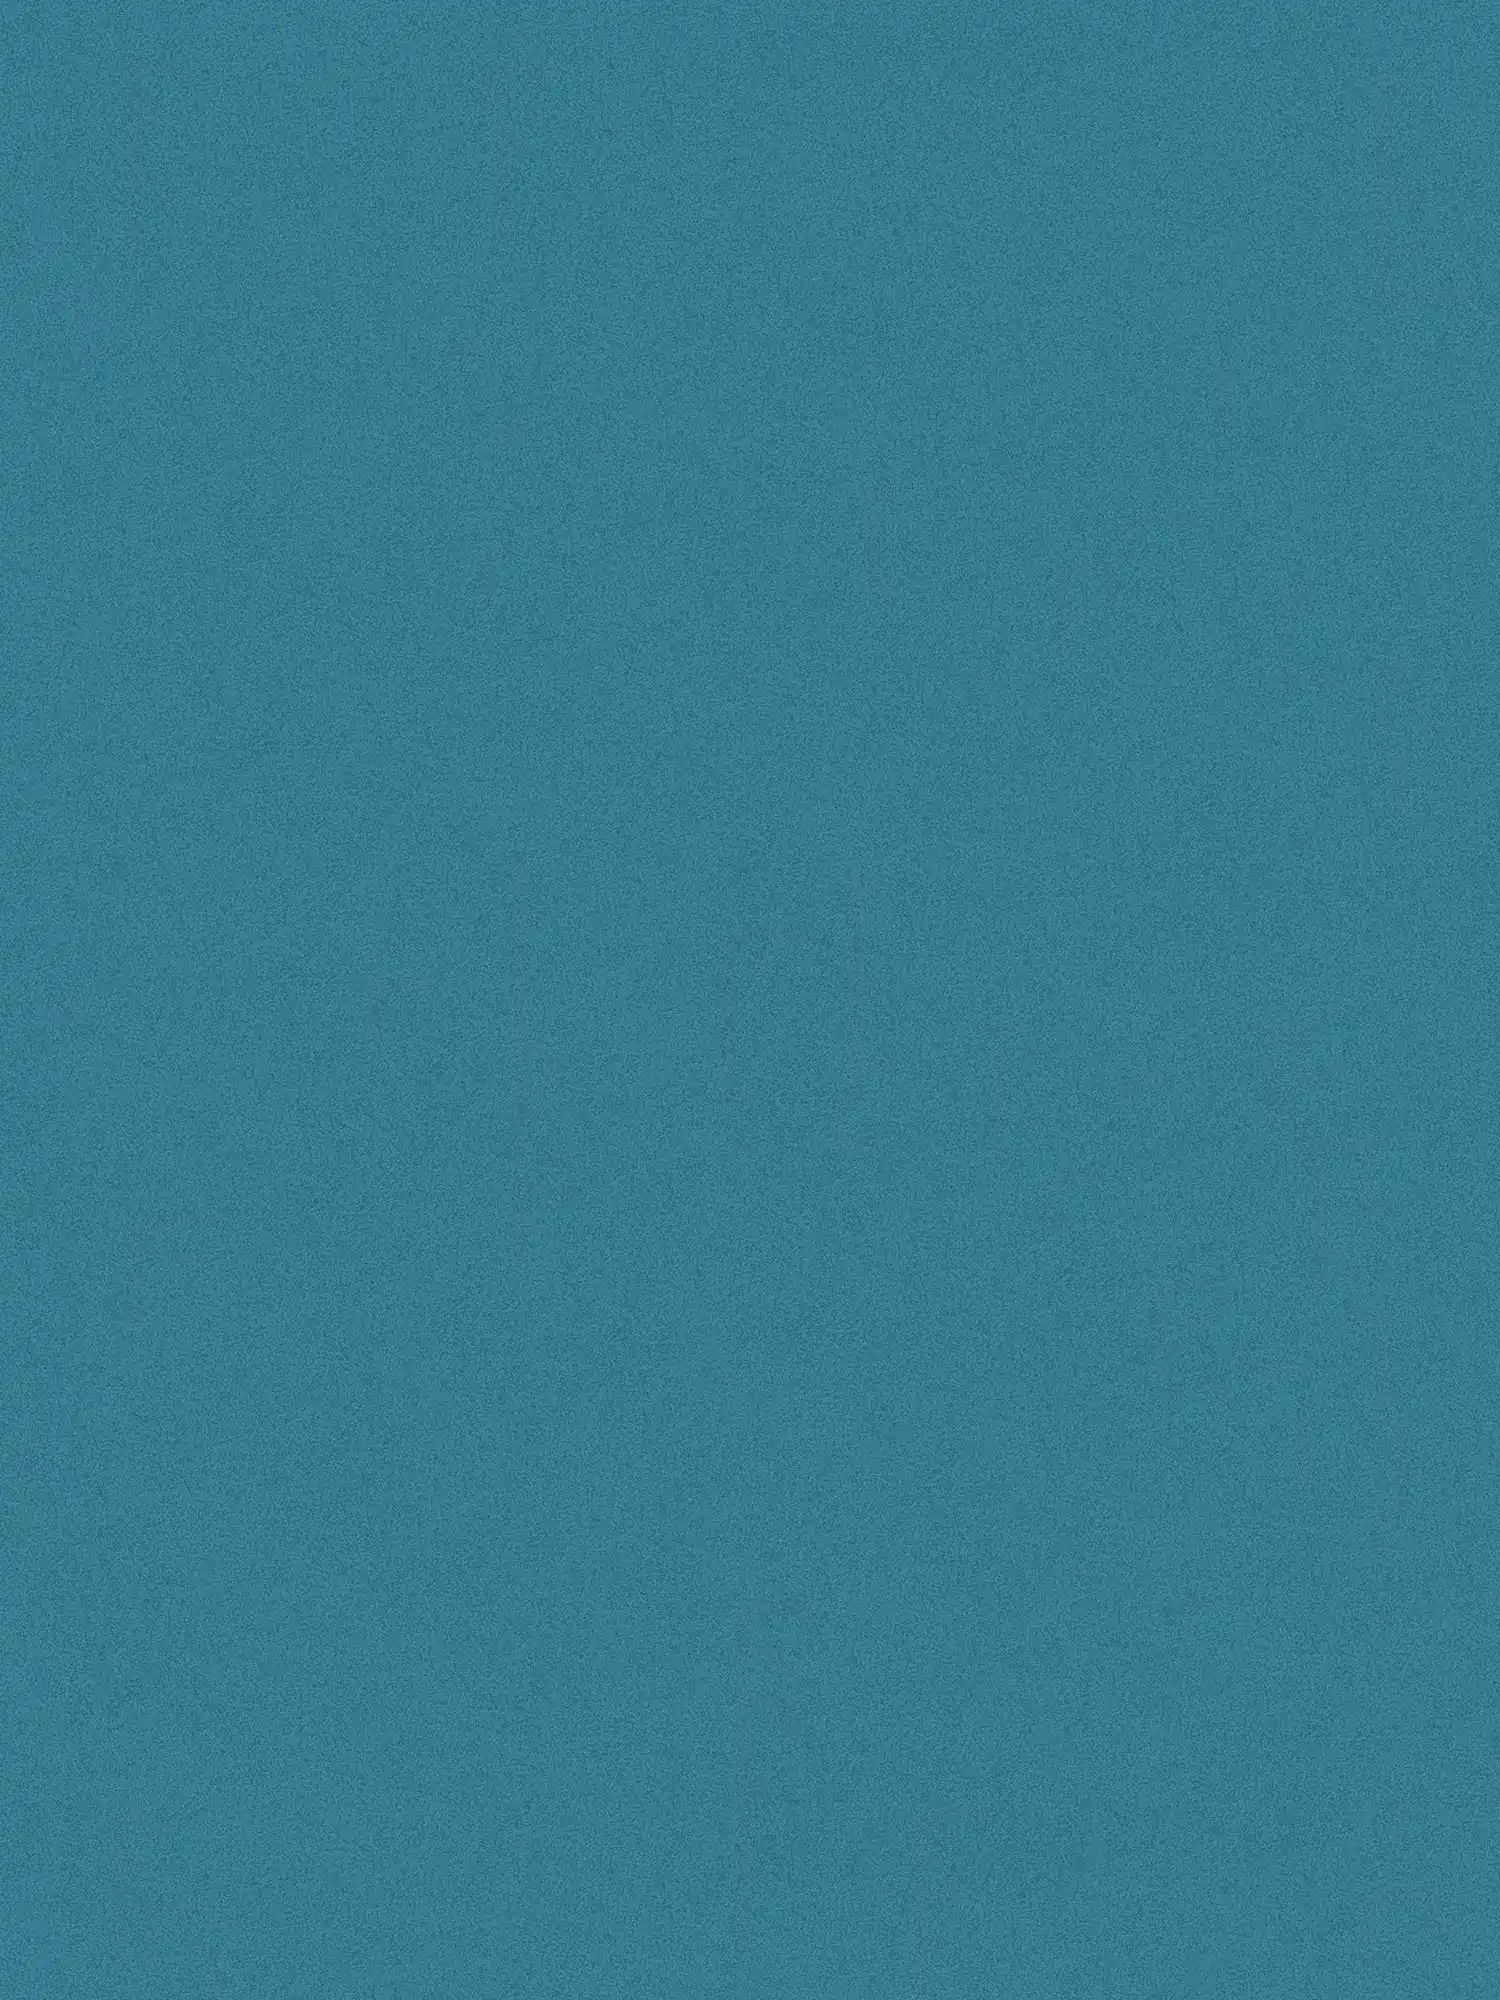 wallpaper dark blue turquoise, satin gloss & texture pattern
